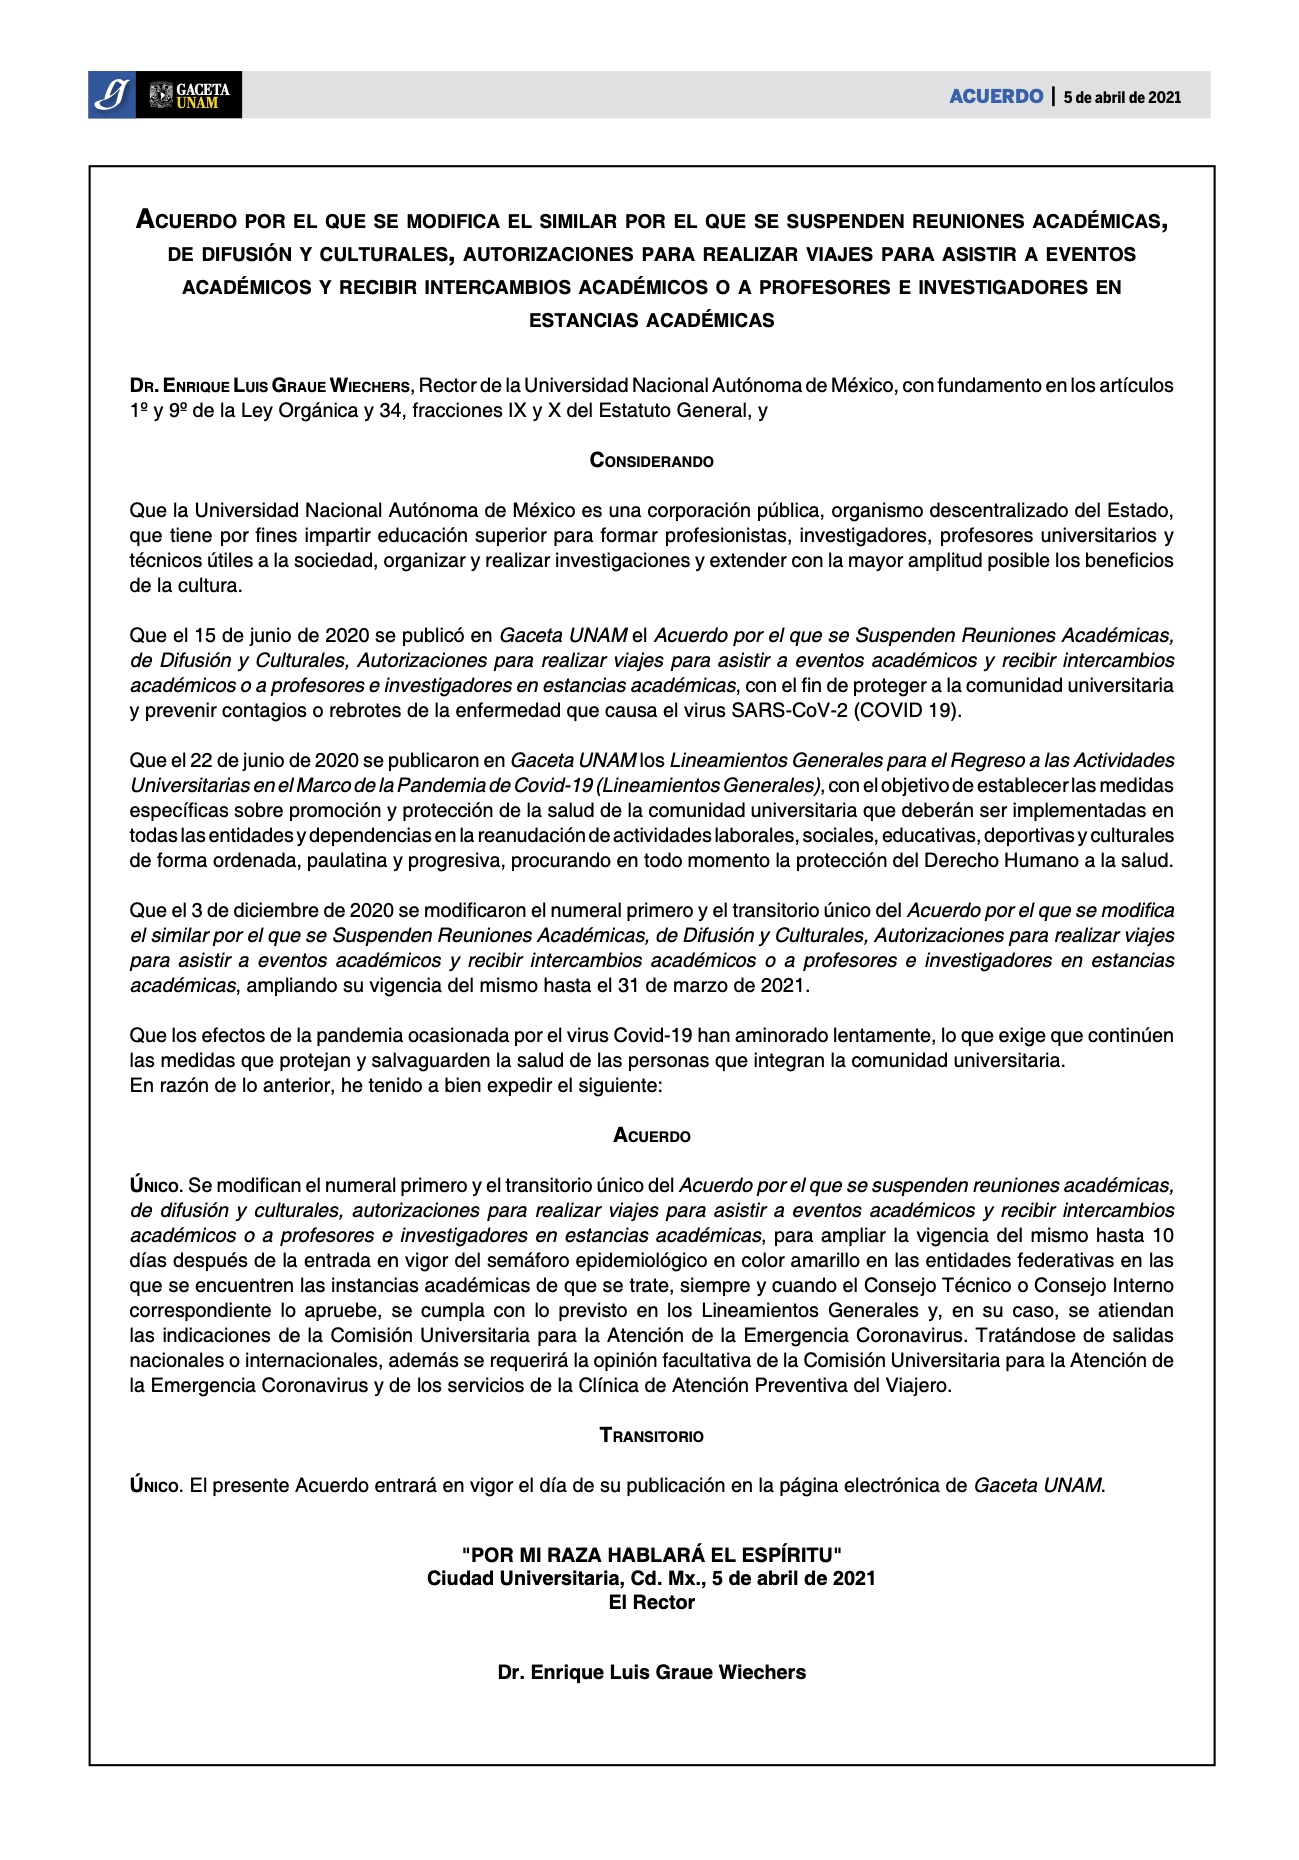 Acuerdo suspenden actividades académicas 05 abril